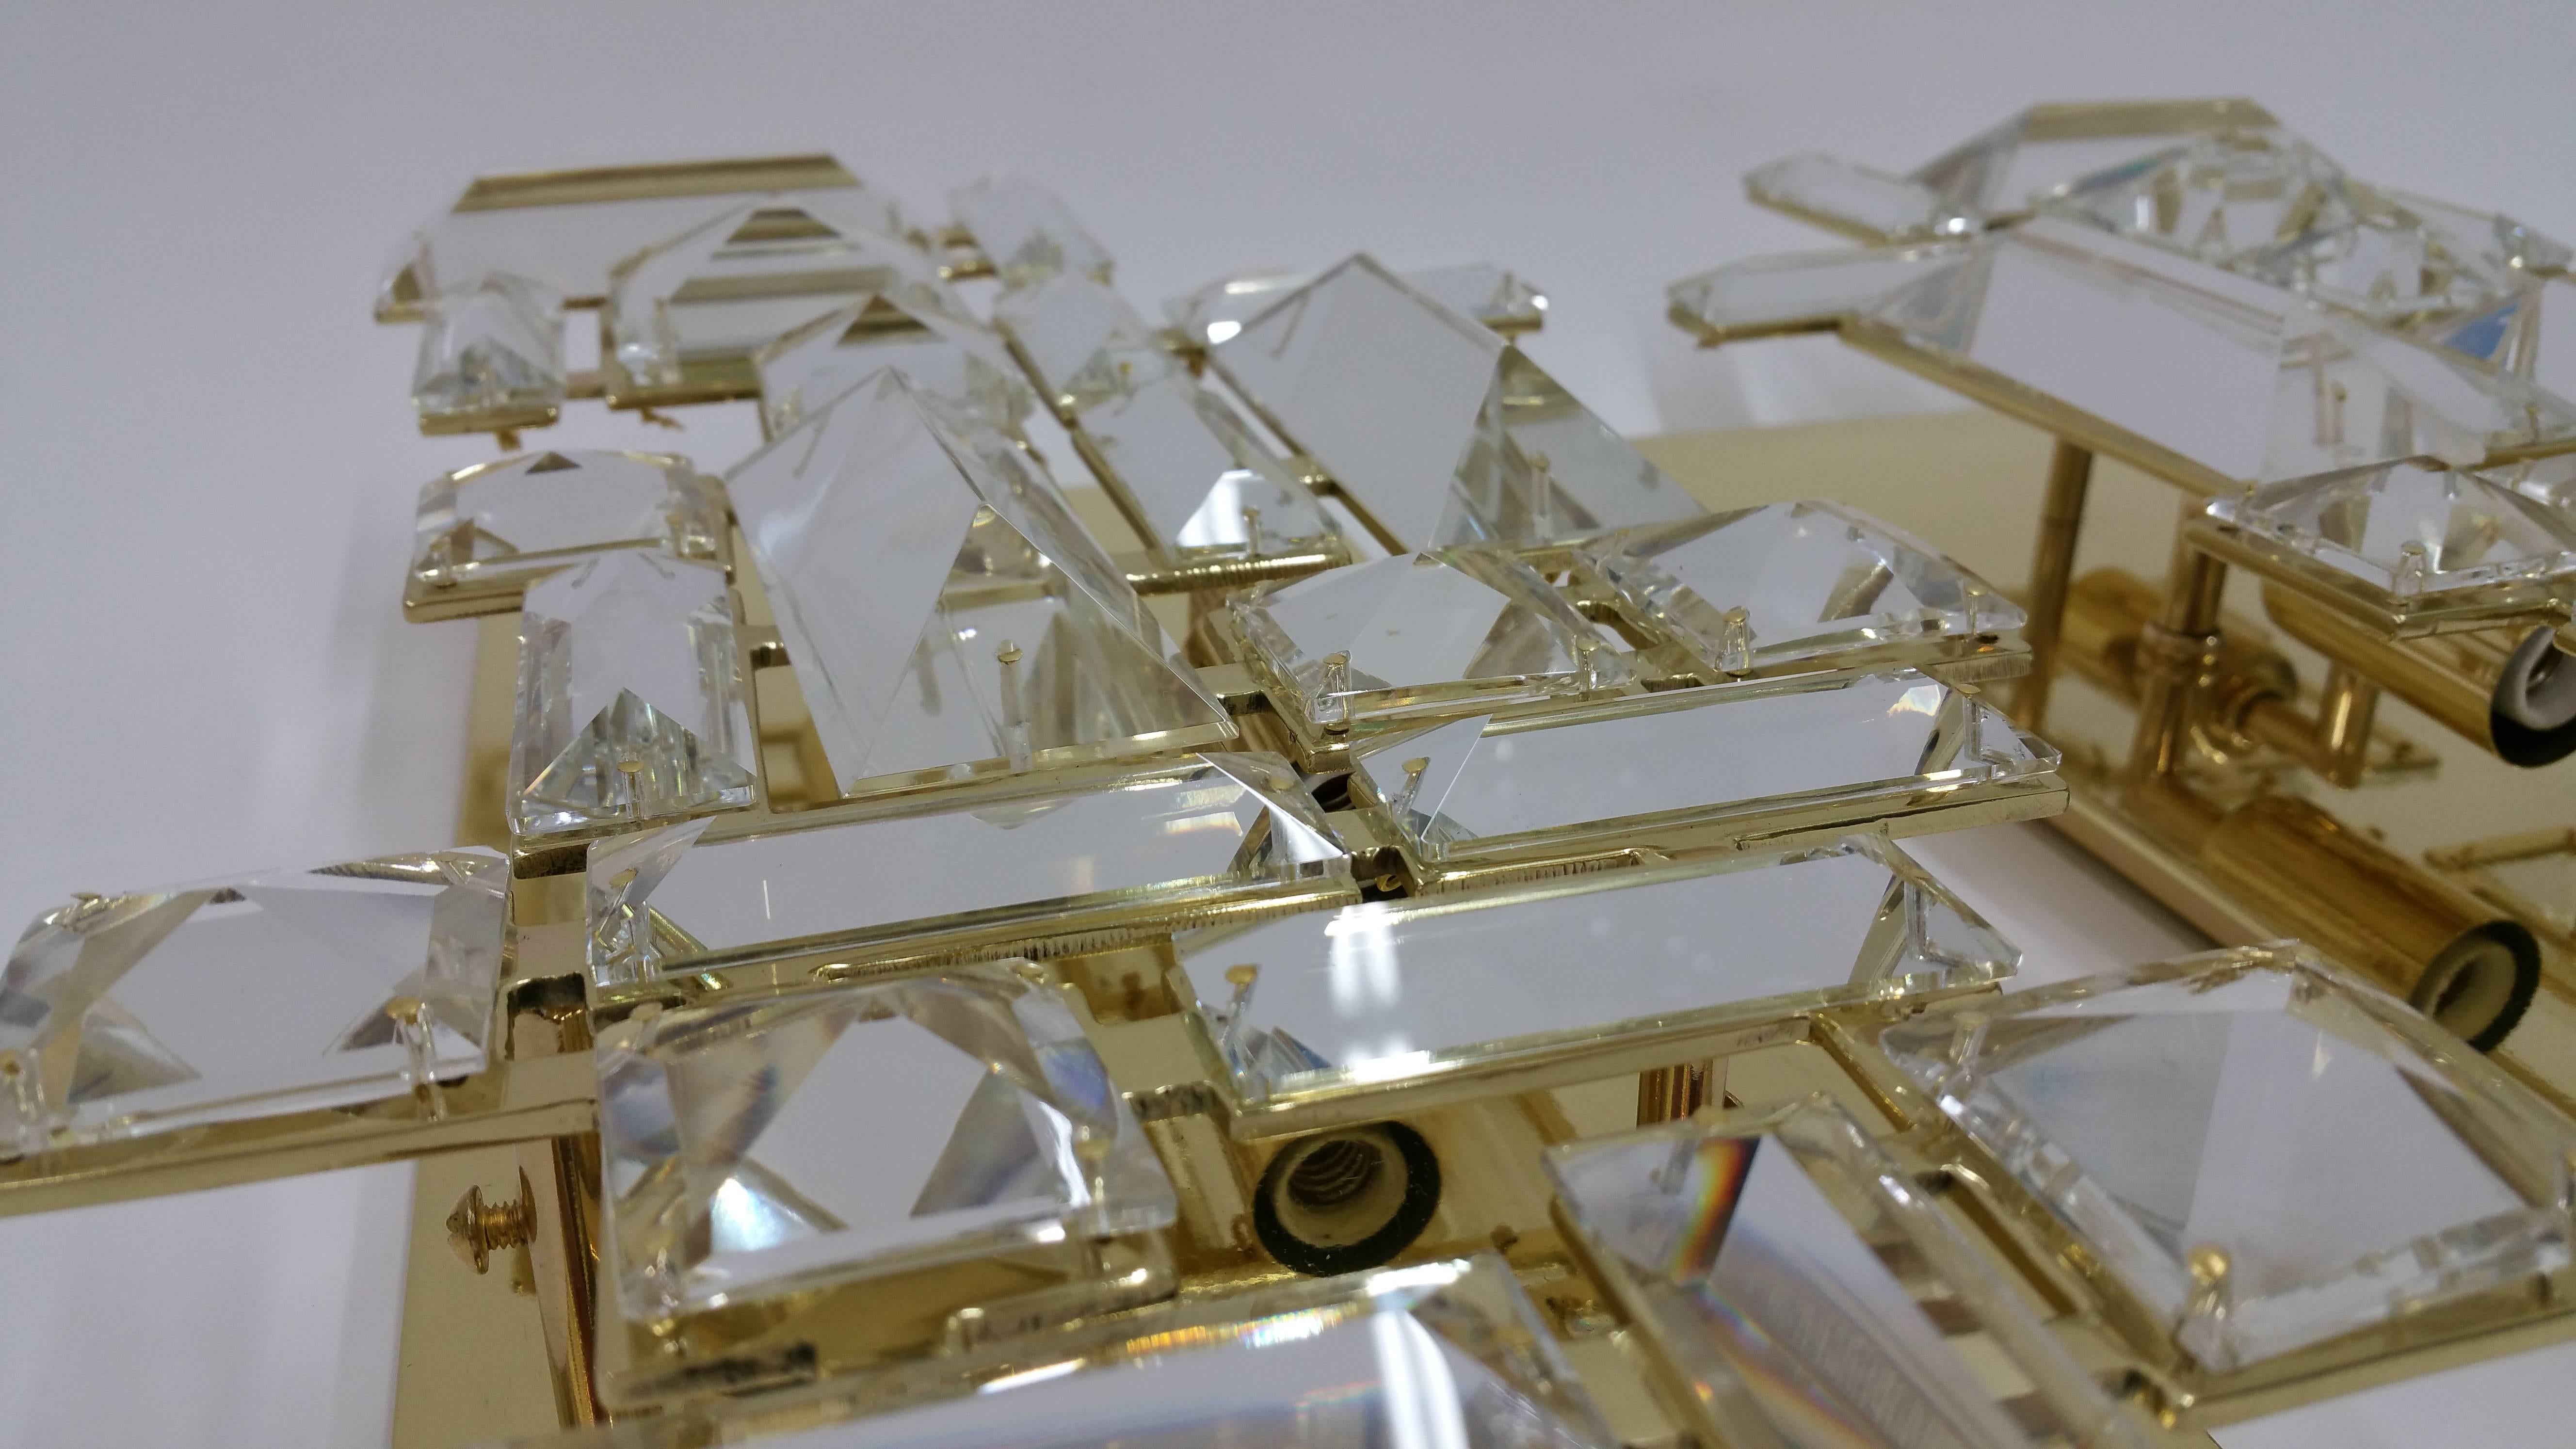 Brass finish sconces with hand-cut crystals.
Three candelabra sockets. 
Max 60 Watts per socket.
 